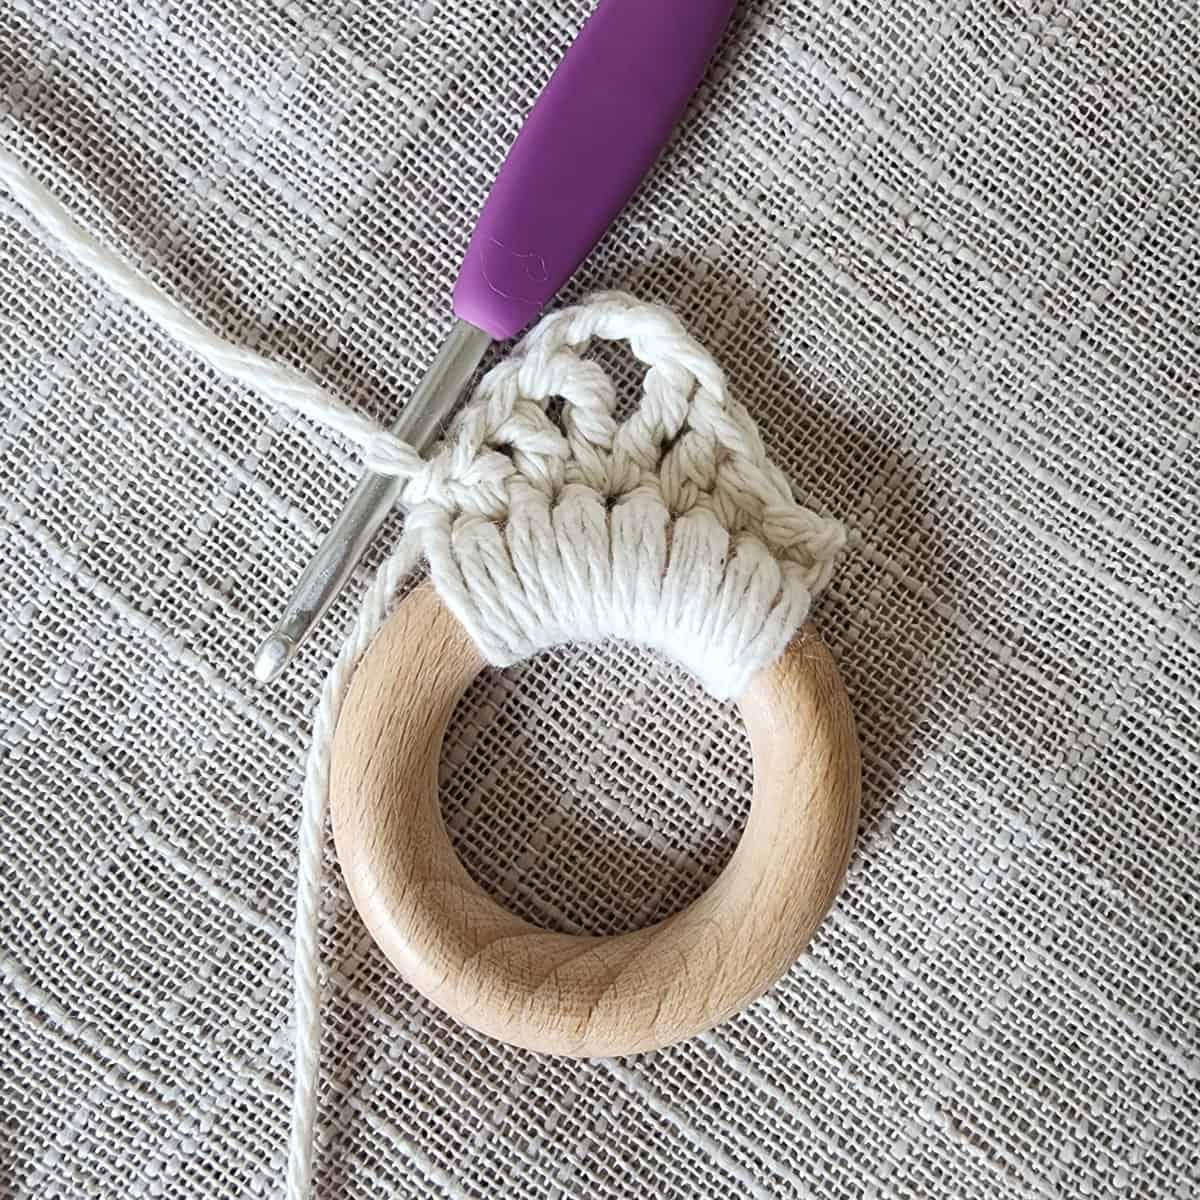 Crochet around small wooden ring with ecru yarn.